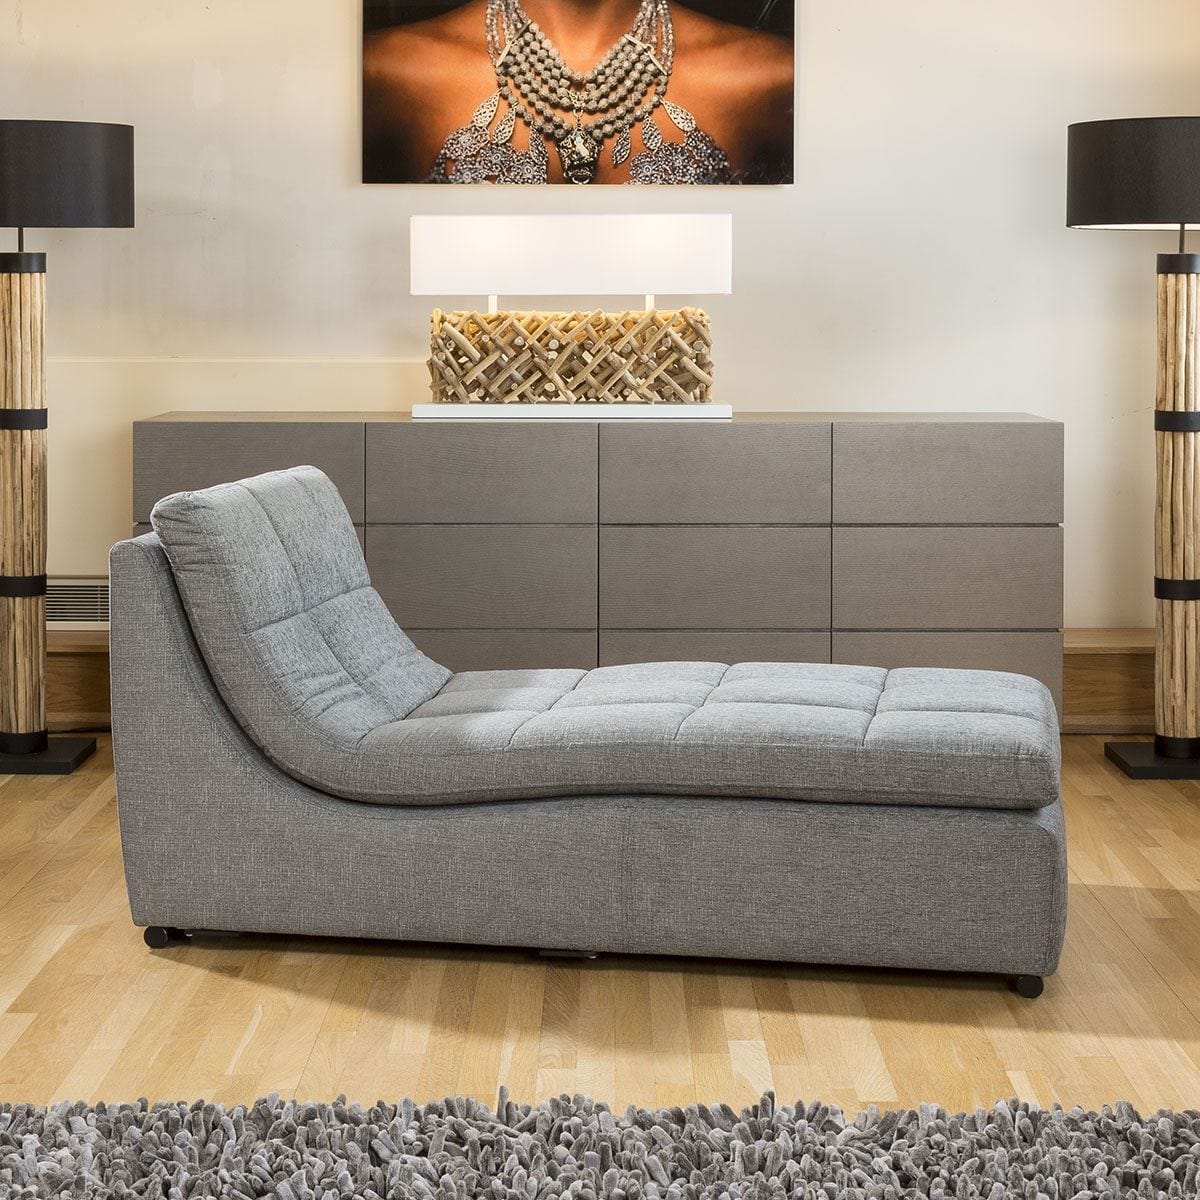 Quatropi Relax Premium Desginer Sofa Middle Piece Single Chair / Chase 80cm Wide